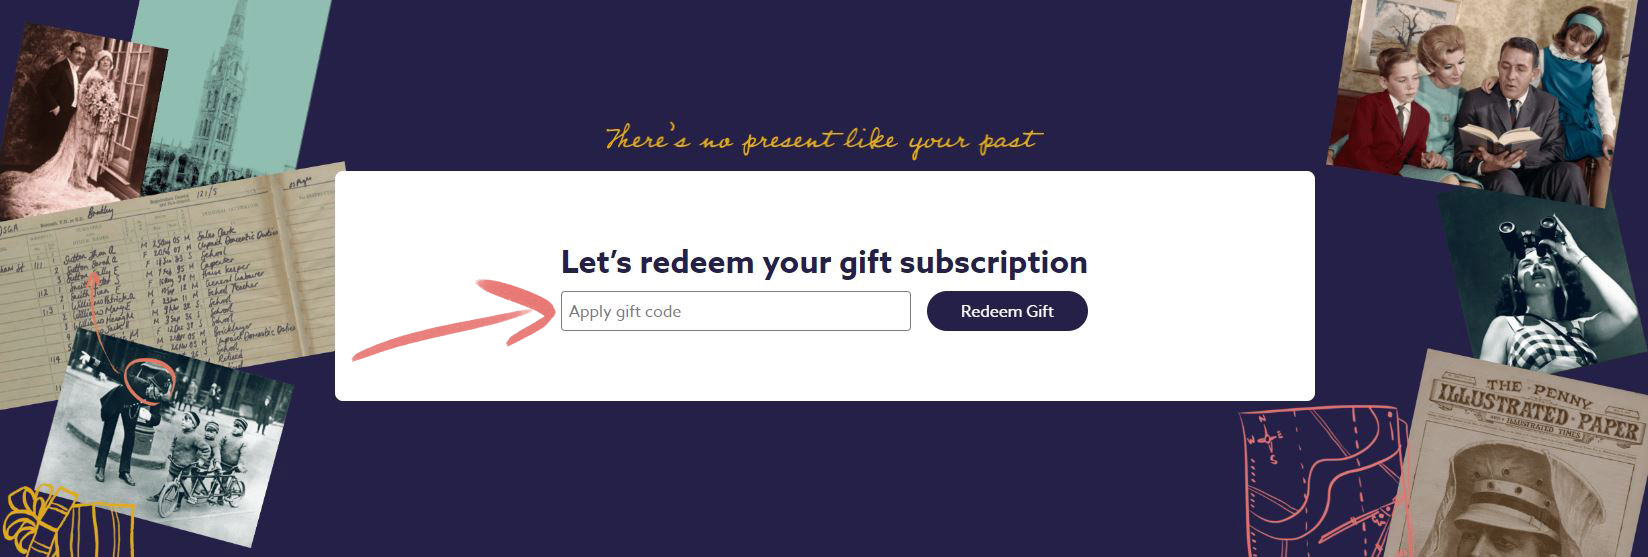 gift-subscription-redeem.JPG